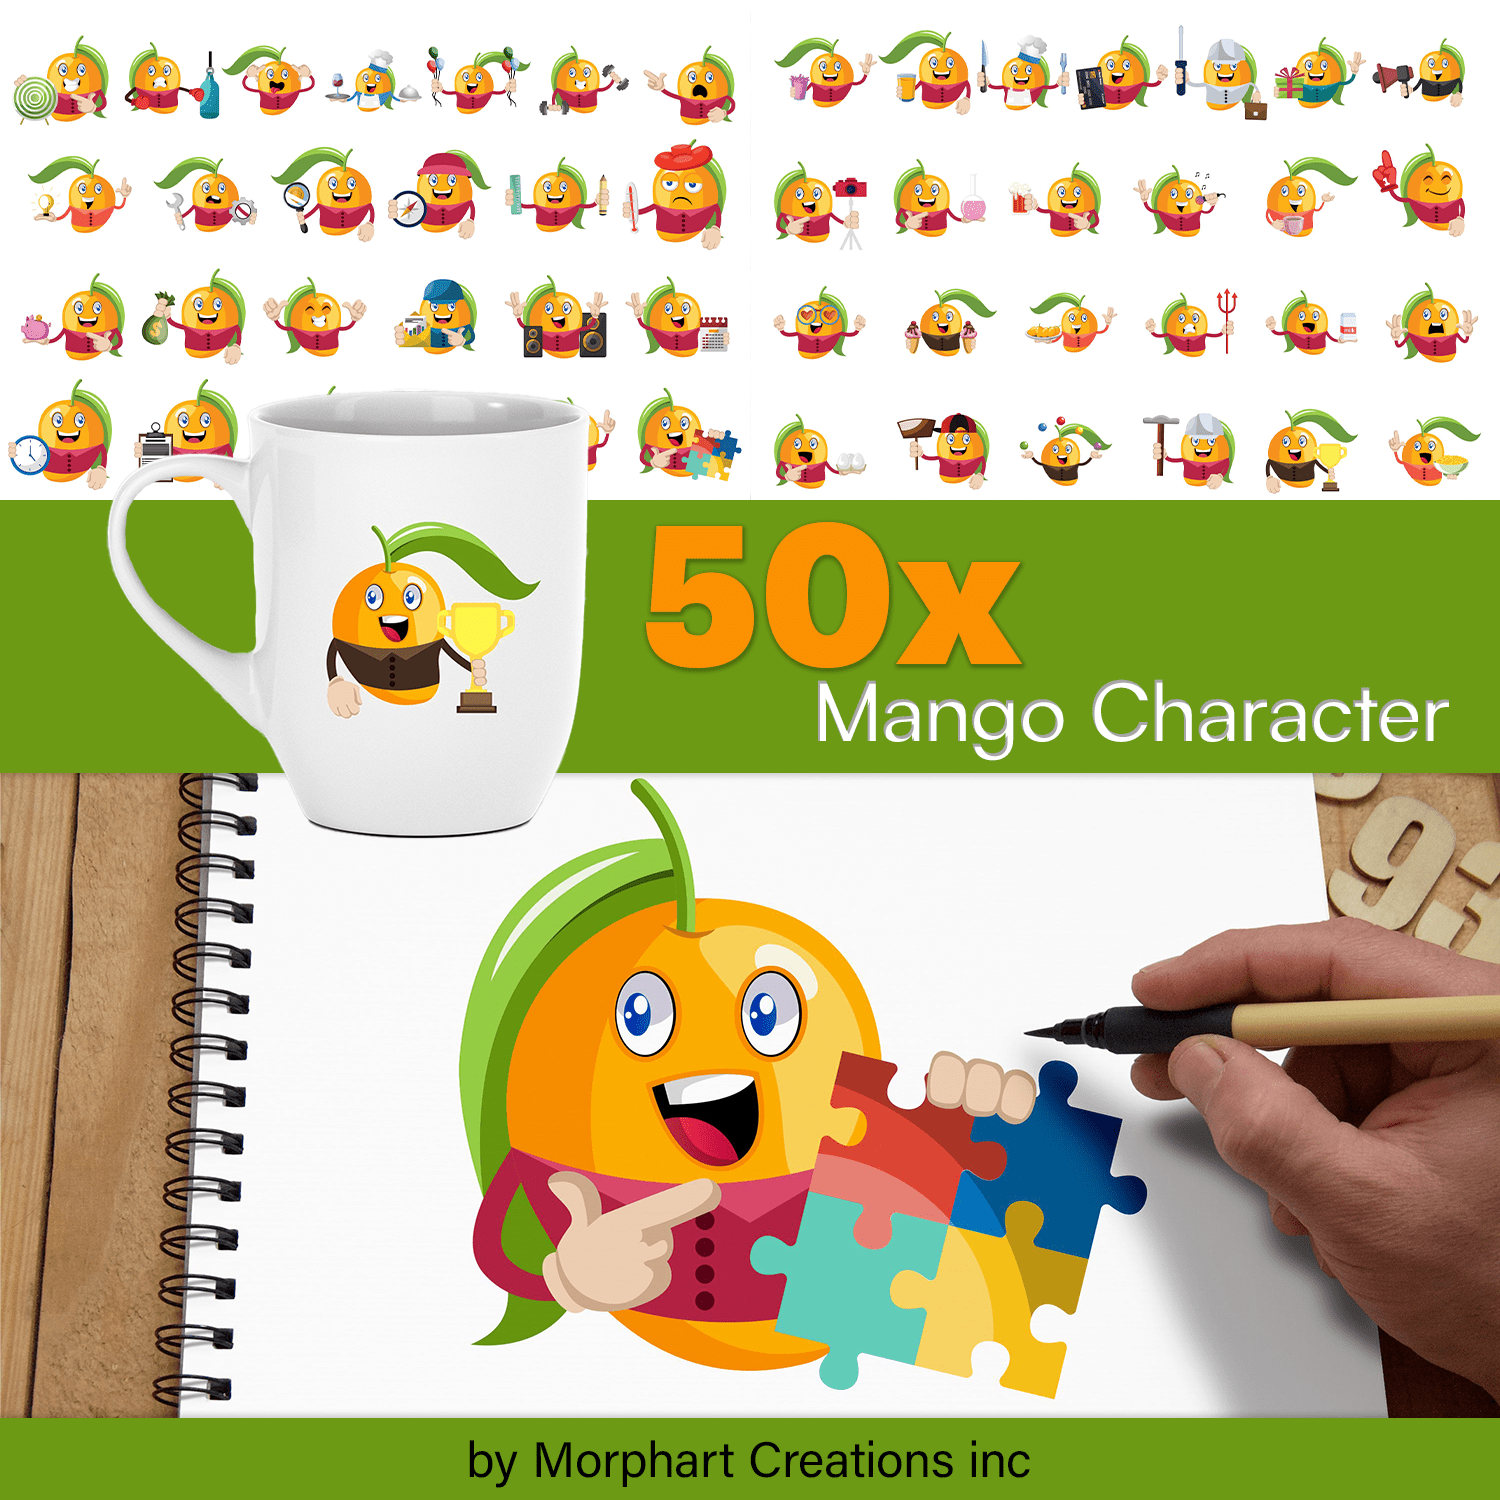 50x mango character created Morphart Creations inc.